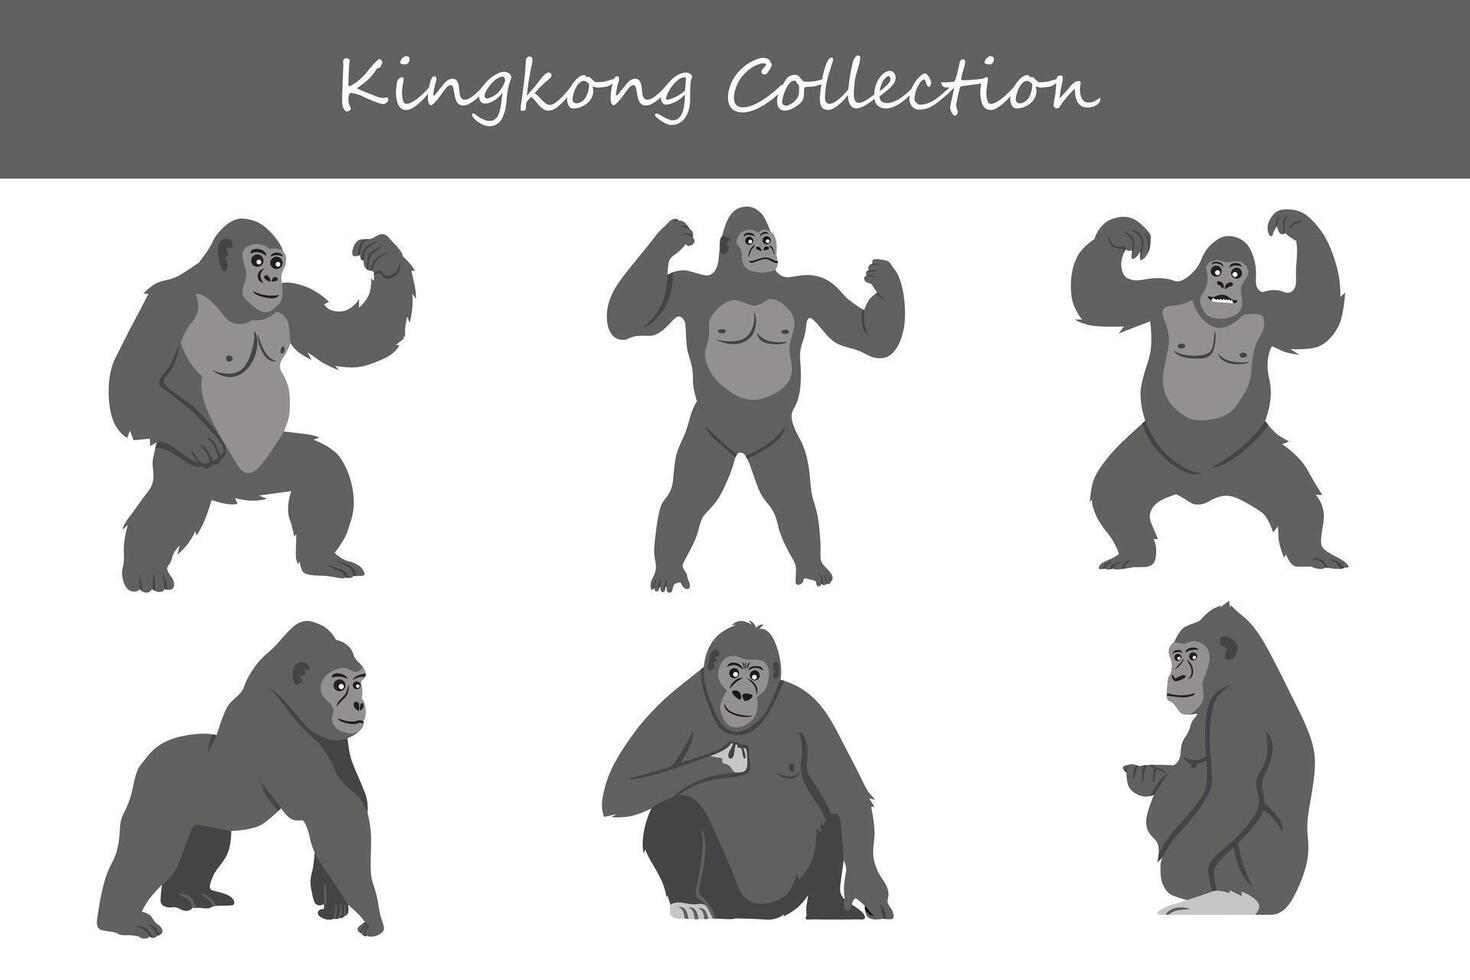 Kingkong collection. Kingkong in different poses. vector